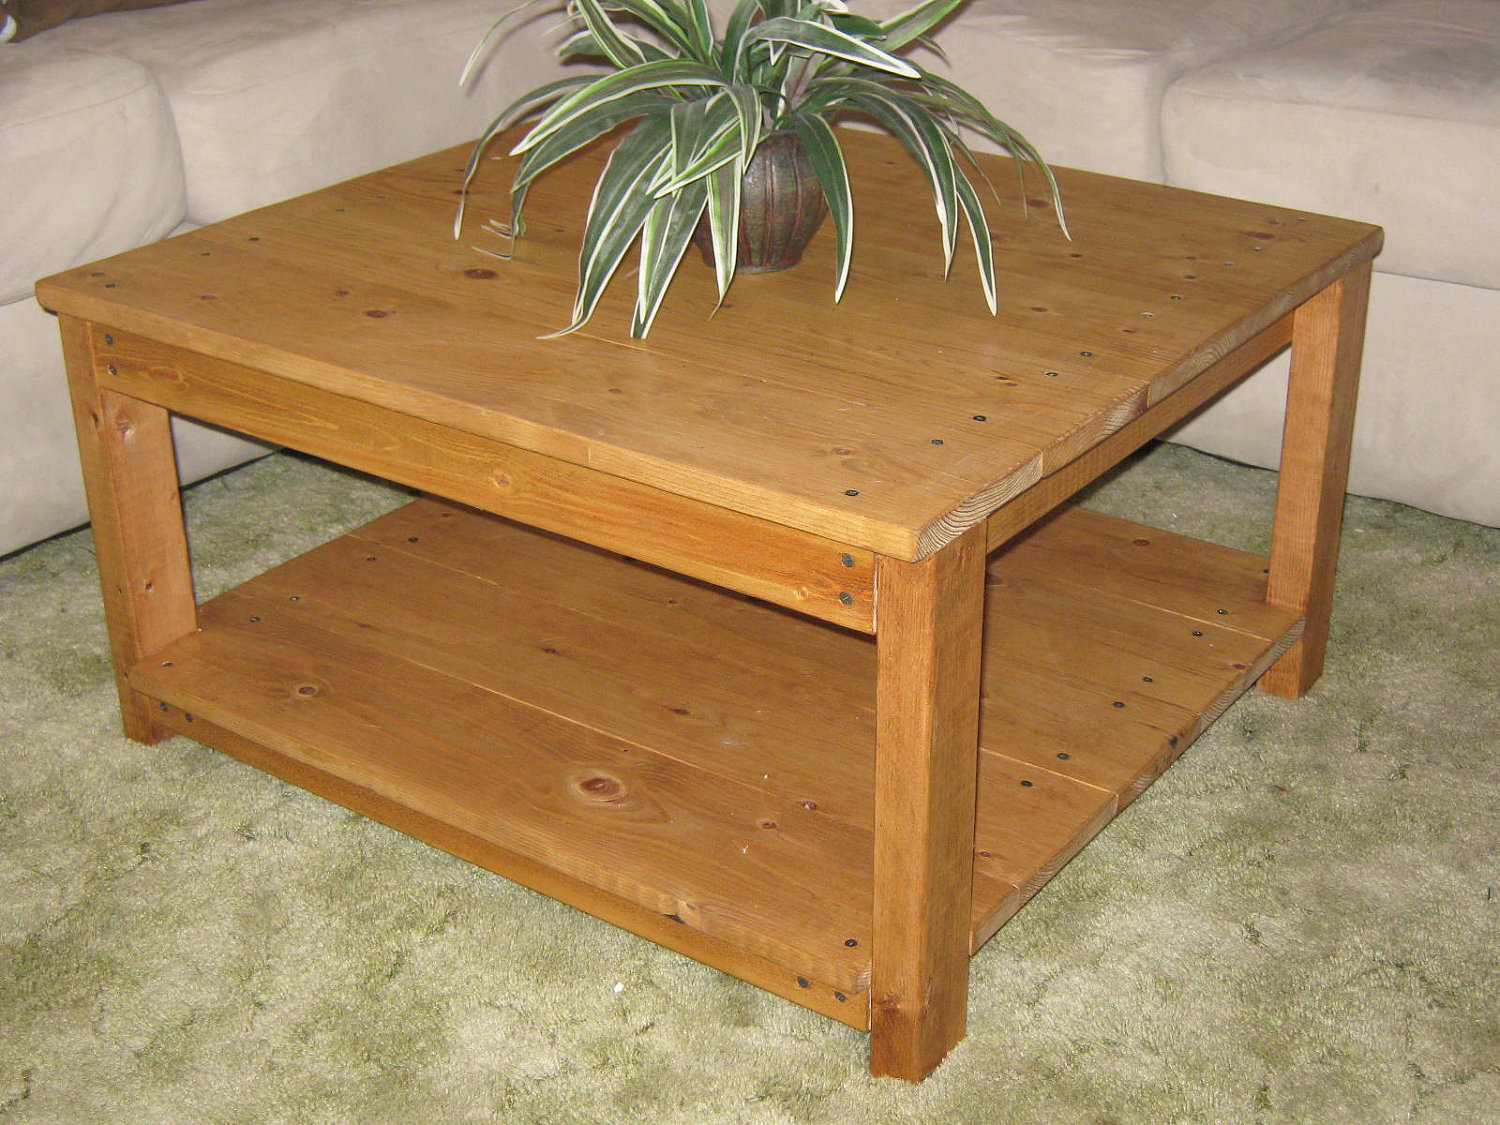 wood coffee table blueprints photo - 4